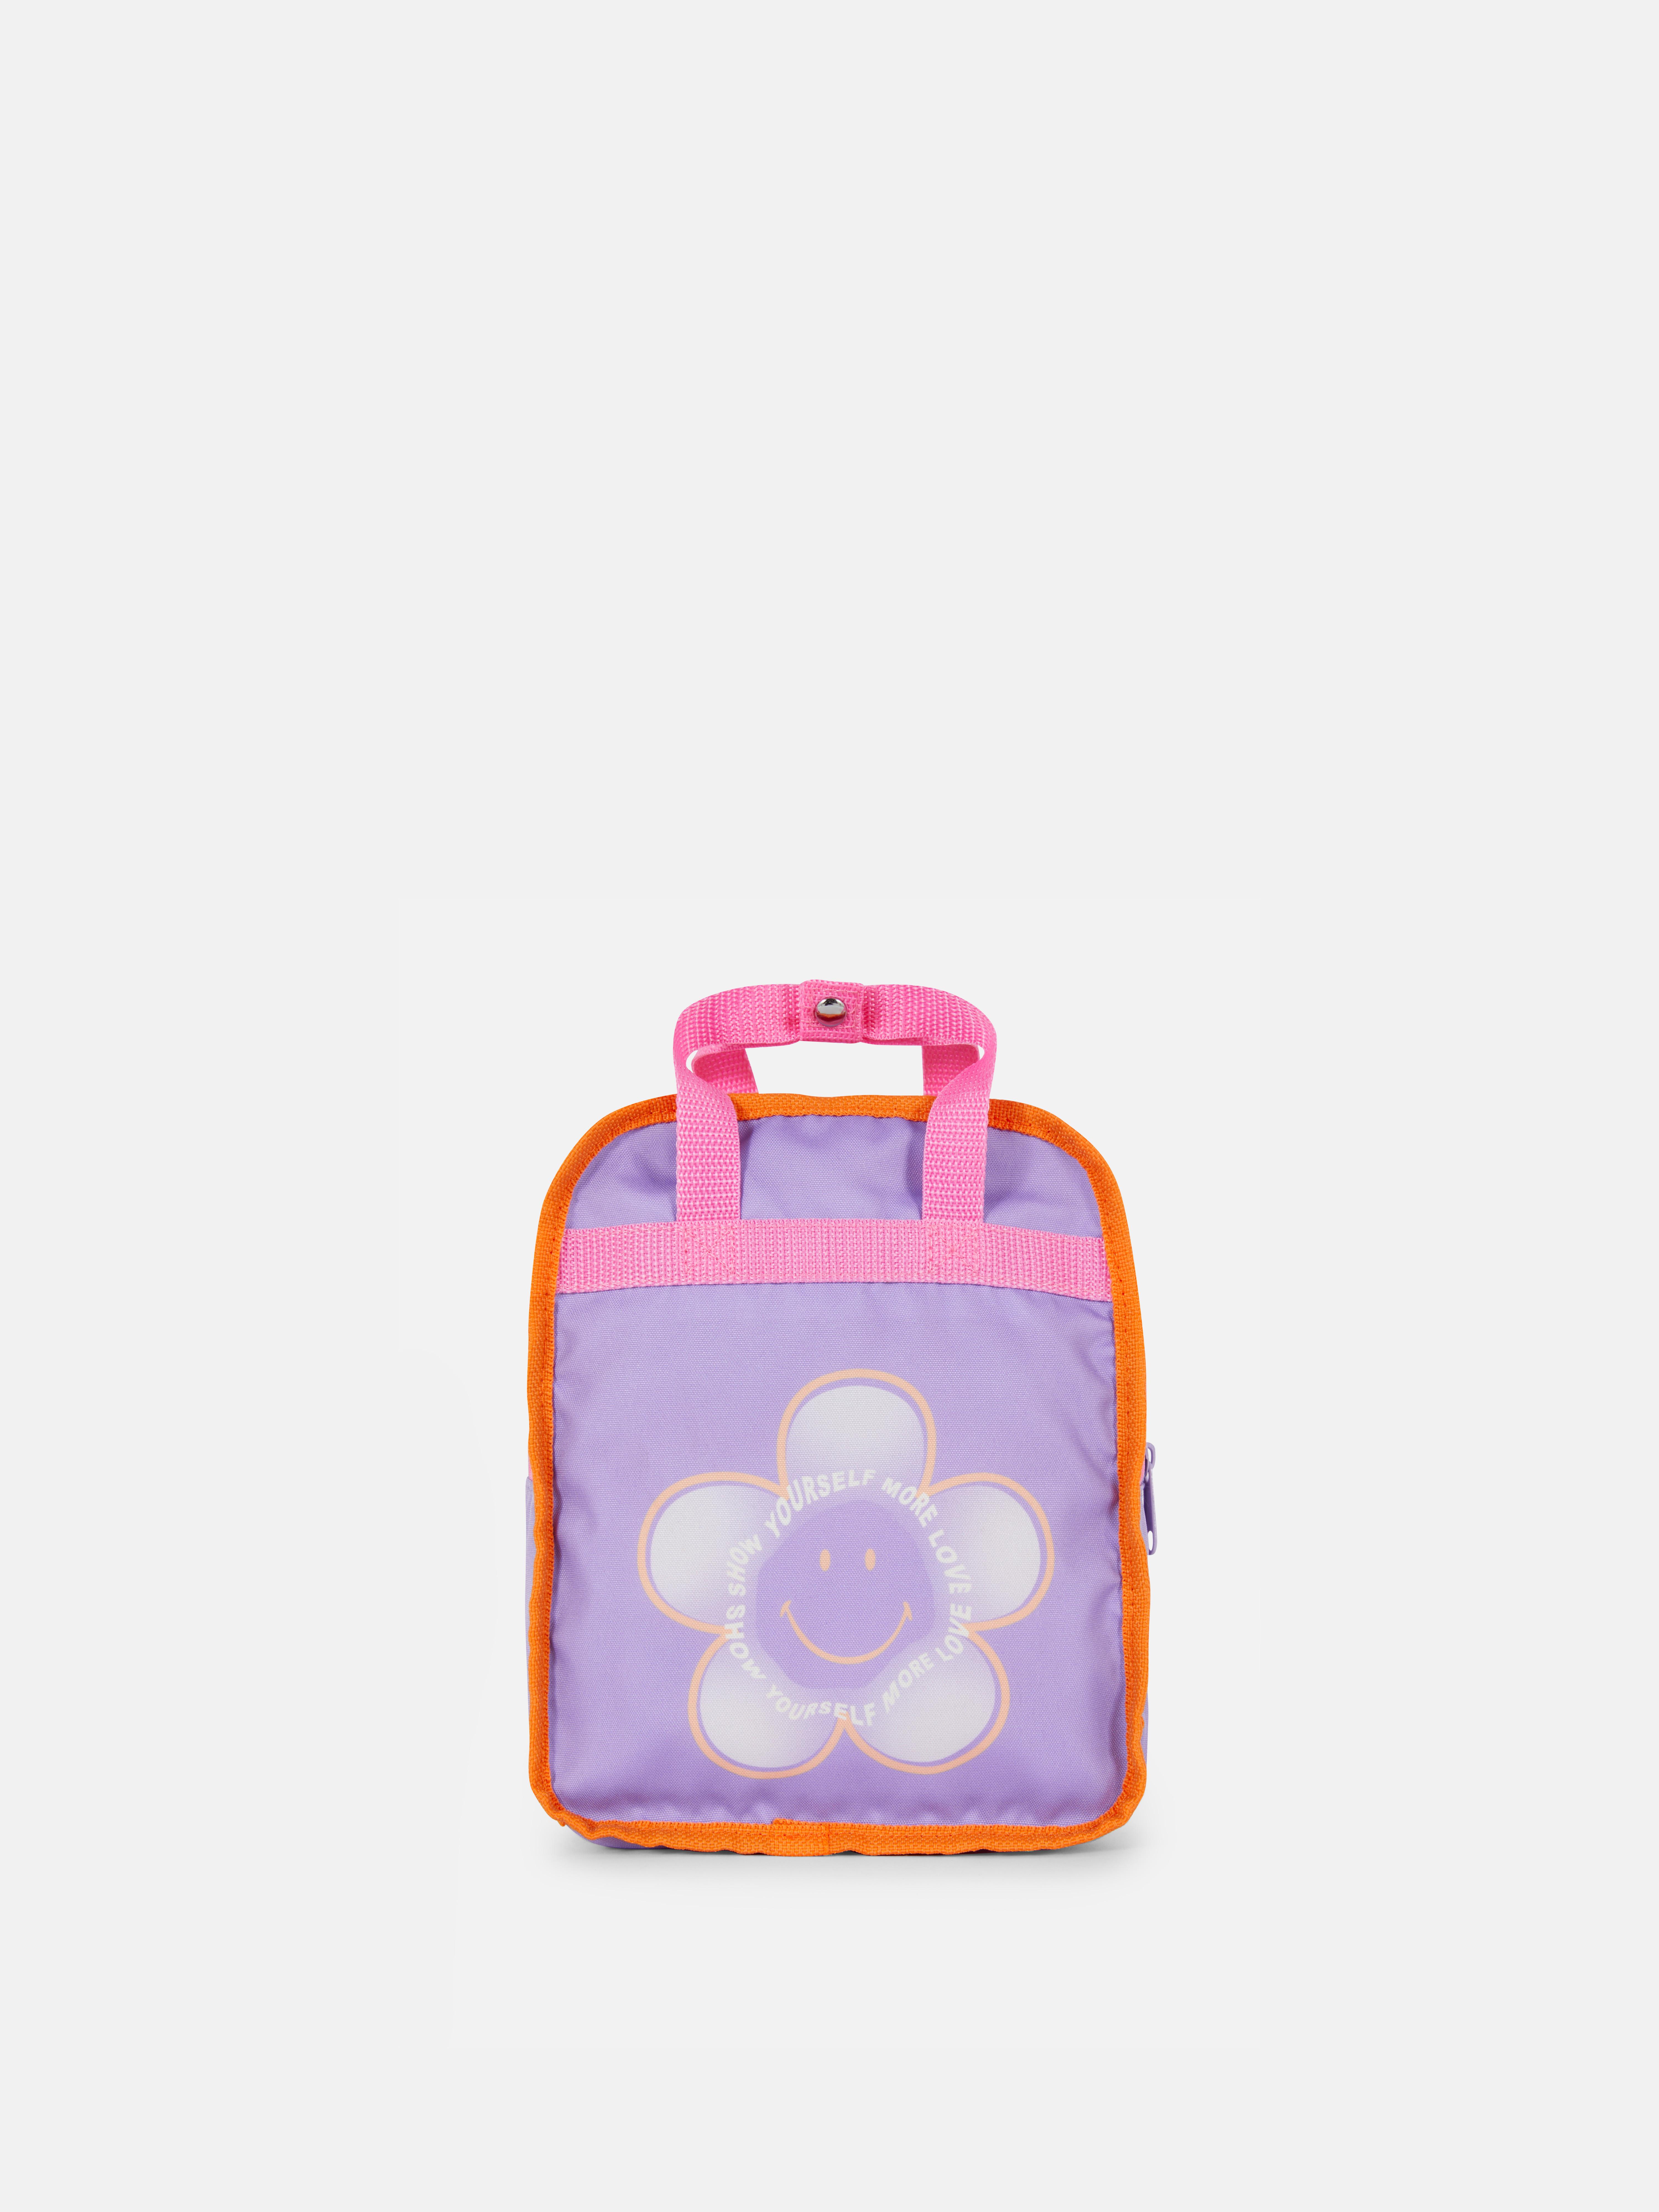 Reversible Patterned Backpack